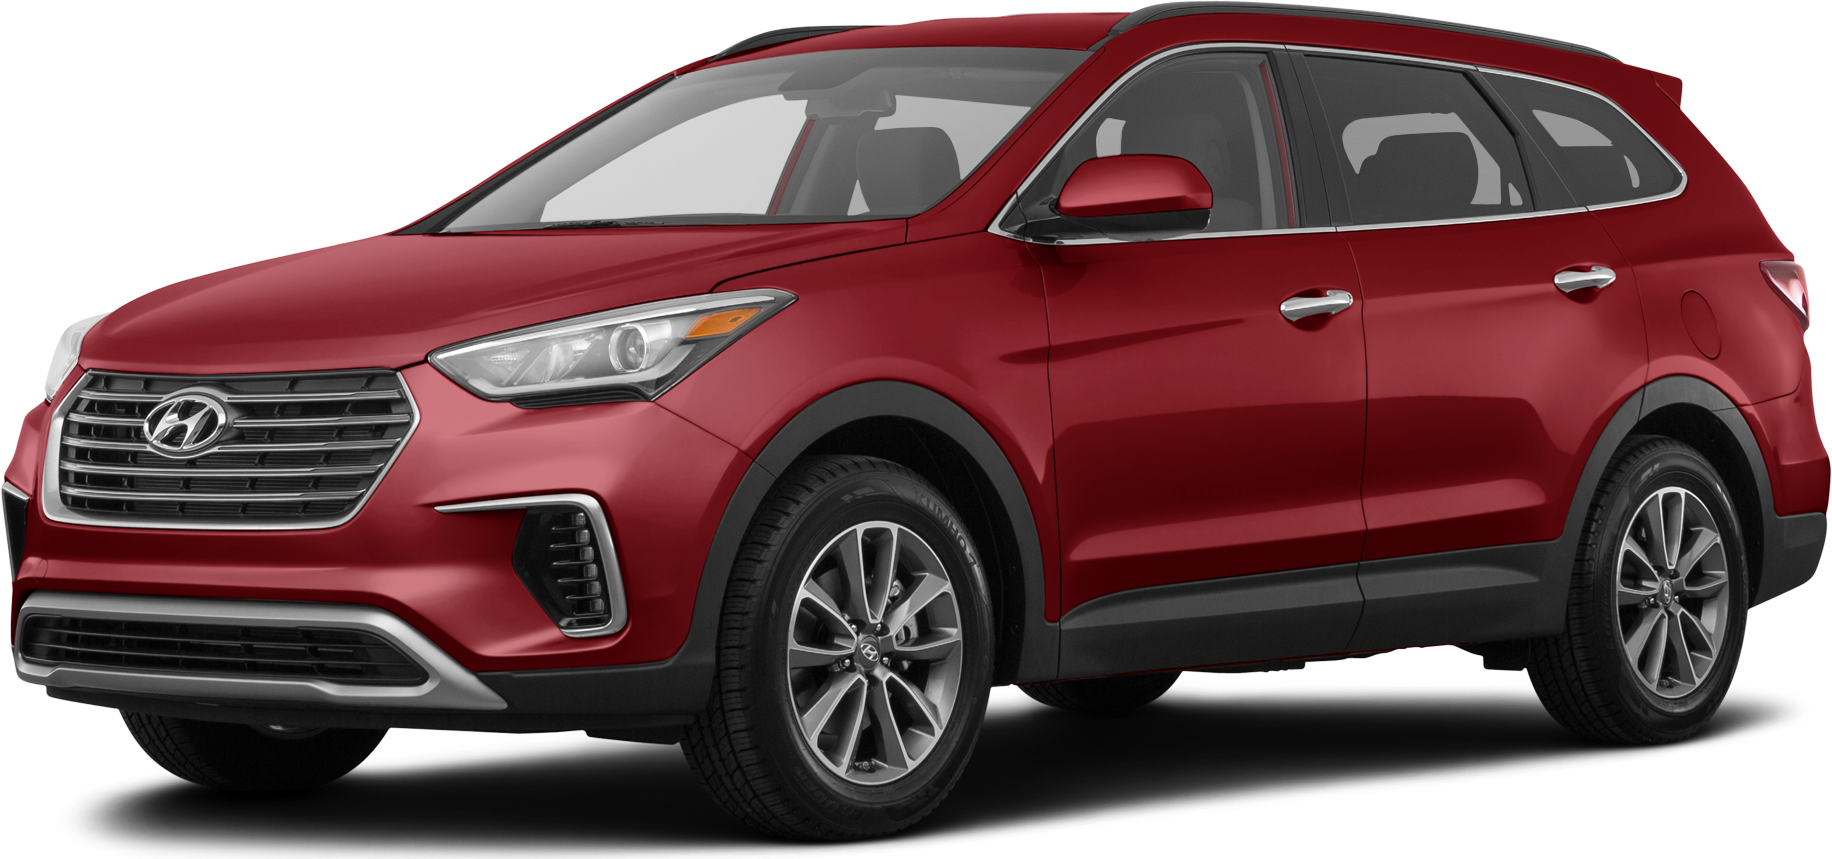 2018 Hyundai Santa Fe Price, Value, Ratings & Reviews Kelley Blue Book